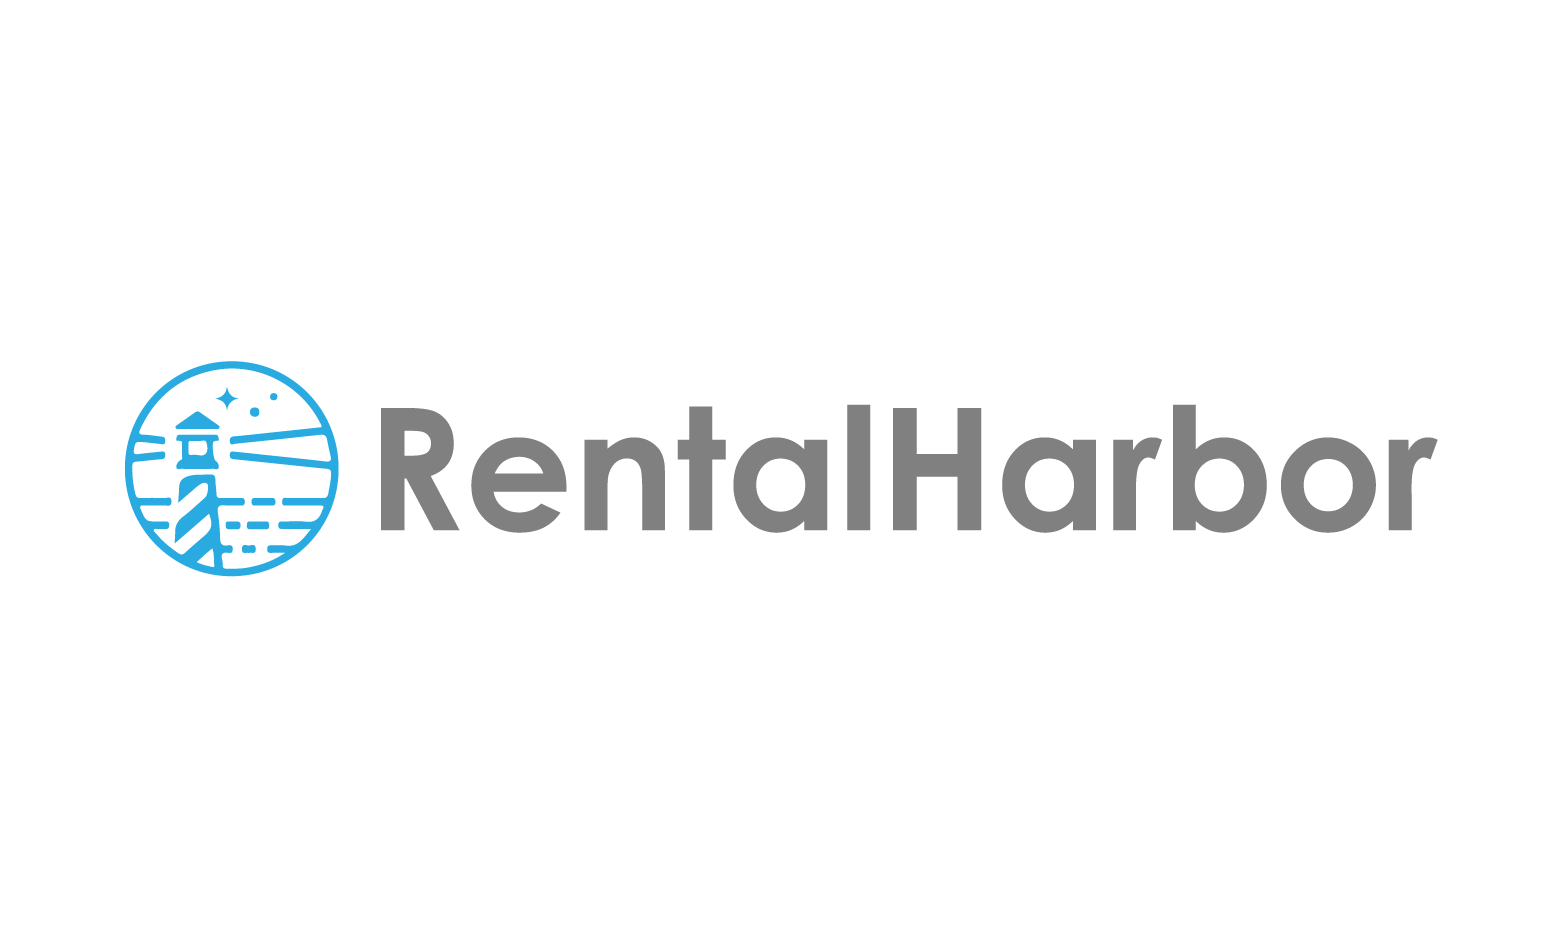 RentalHarbor.com - Creative brandable domain for sale